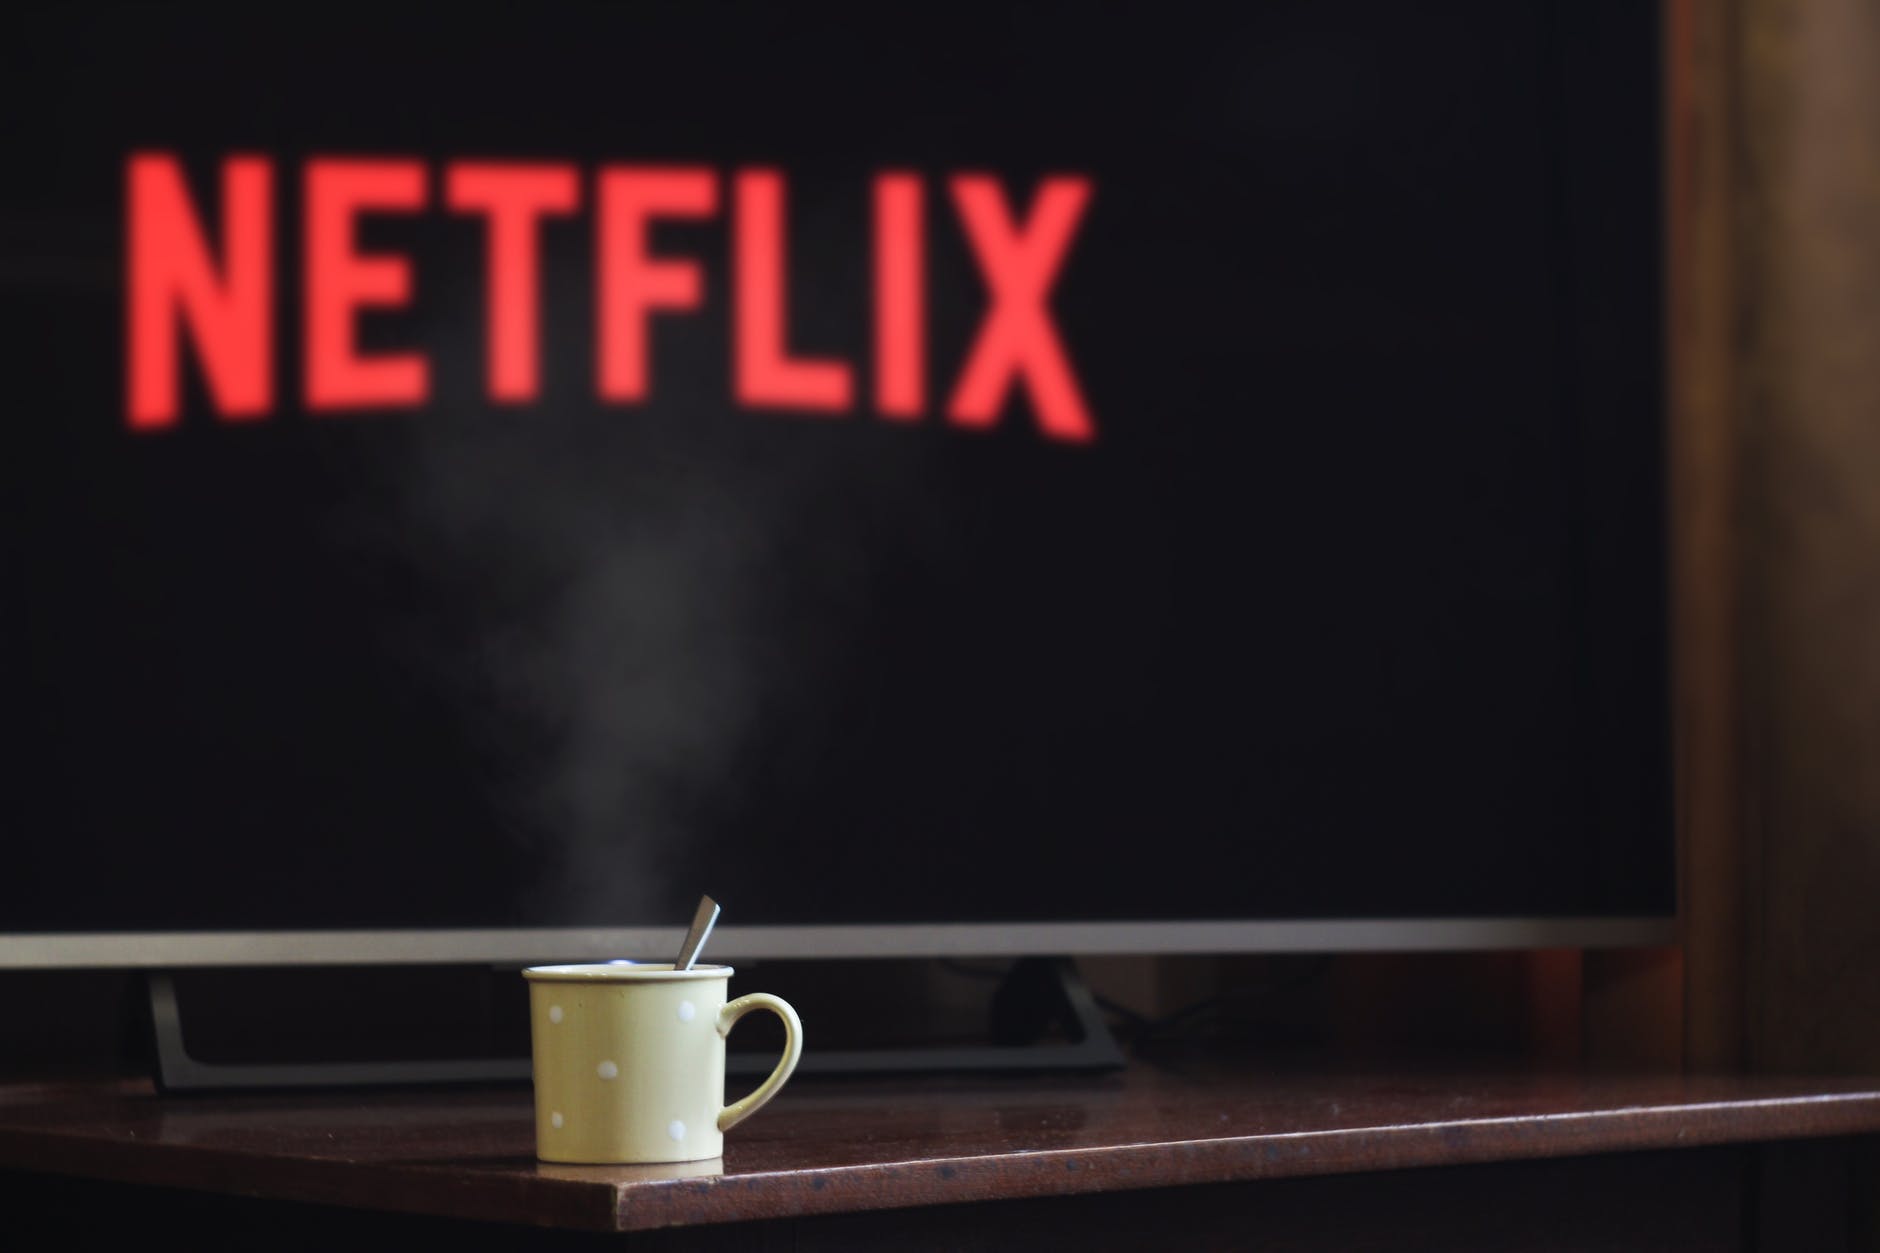 Netflixの地域別業績、アジア太平洋が売上高と加入者で最大の伸び